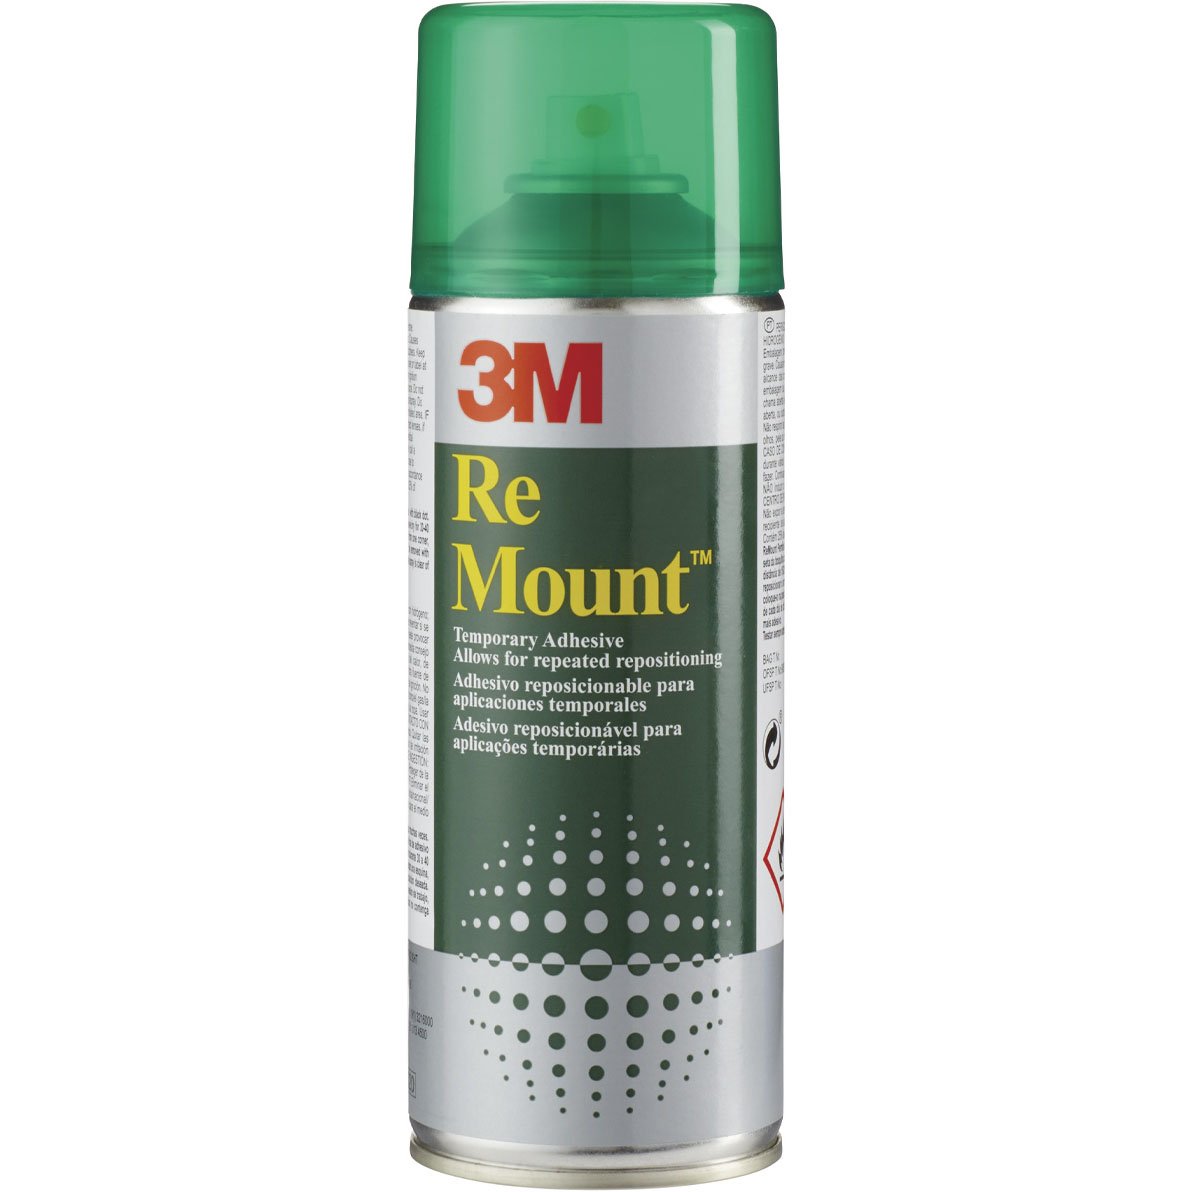 3M Re Mount spraylim